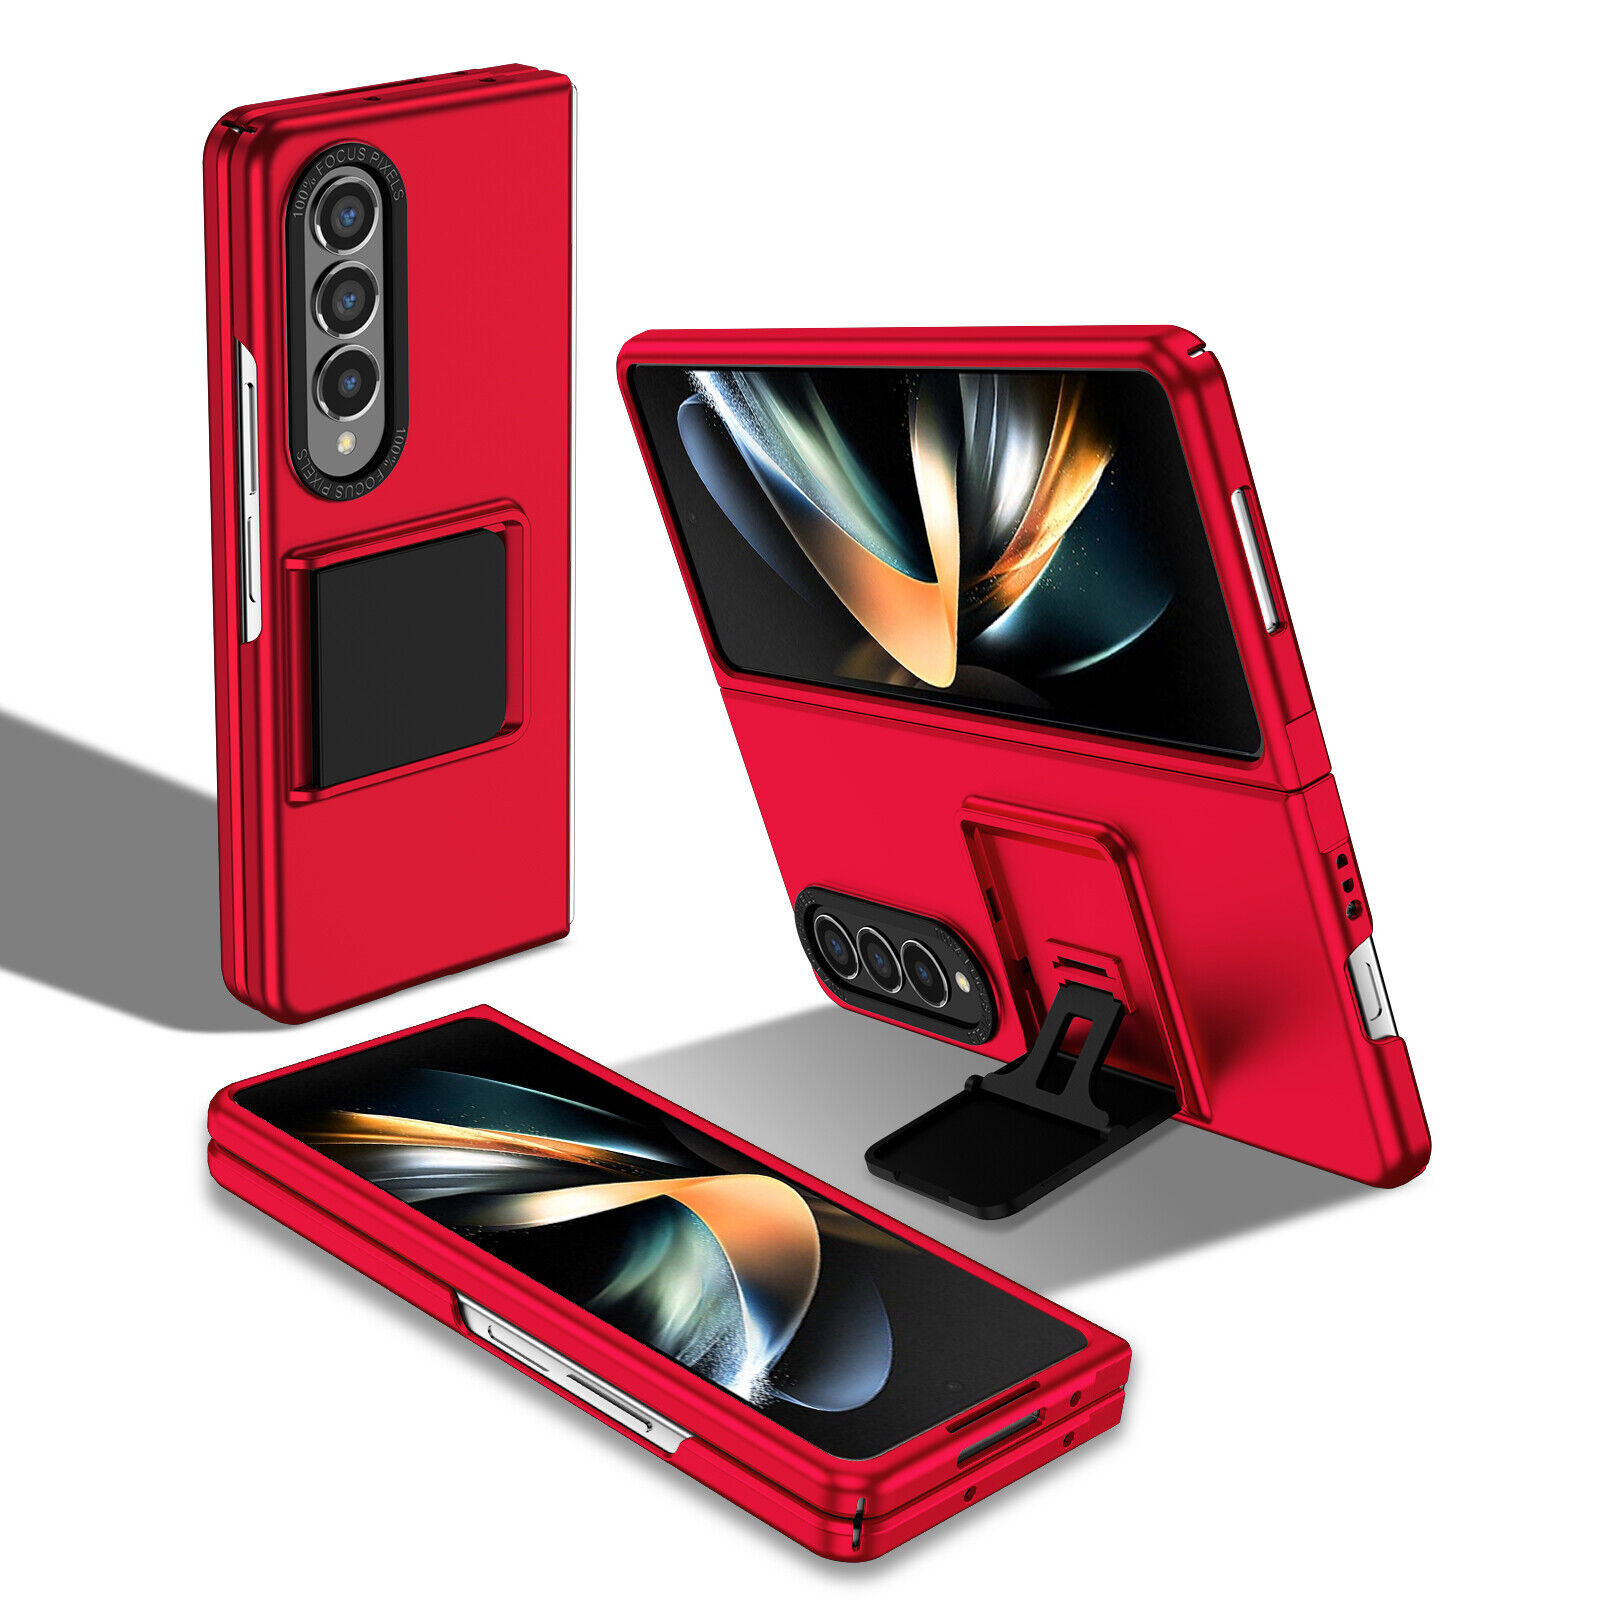 Samsung Galaxy Z Fold 4 Fold 3 5G Shockproof Case Slim Fold Stand Hard Cover Red